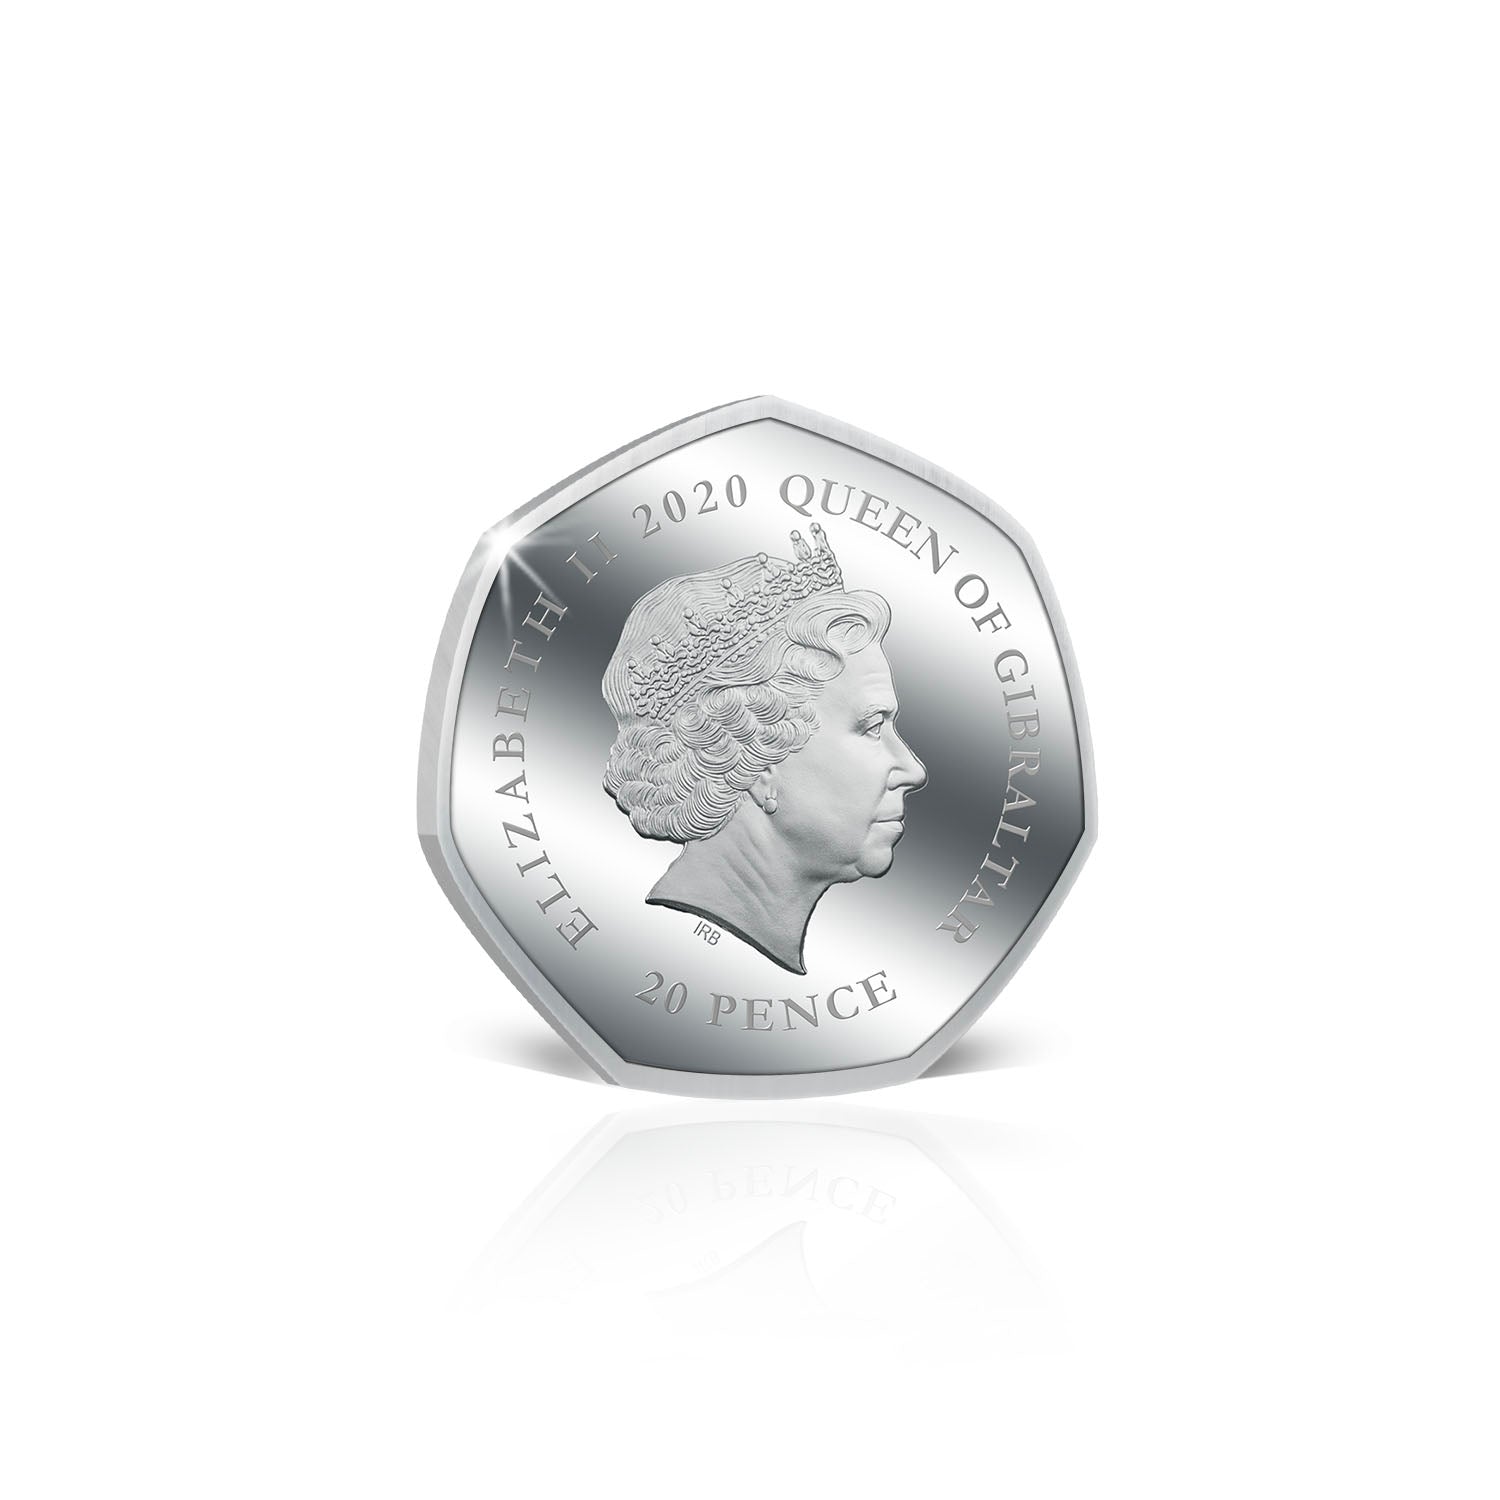 UEFA EURO 2020 Mascot Silver Plated Coin